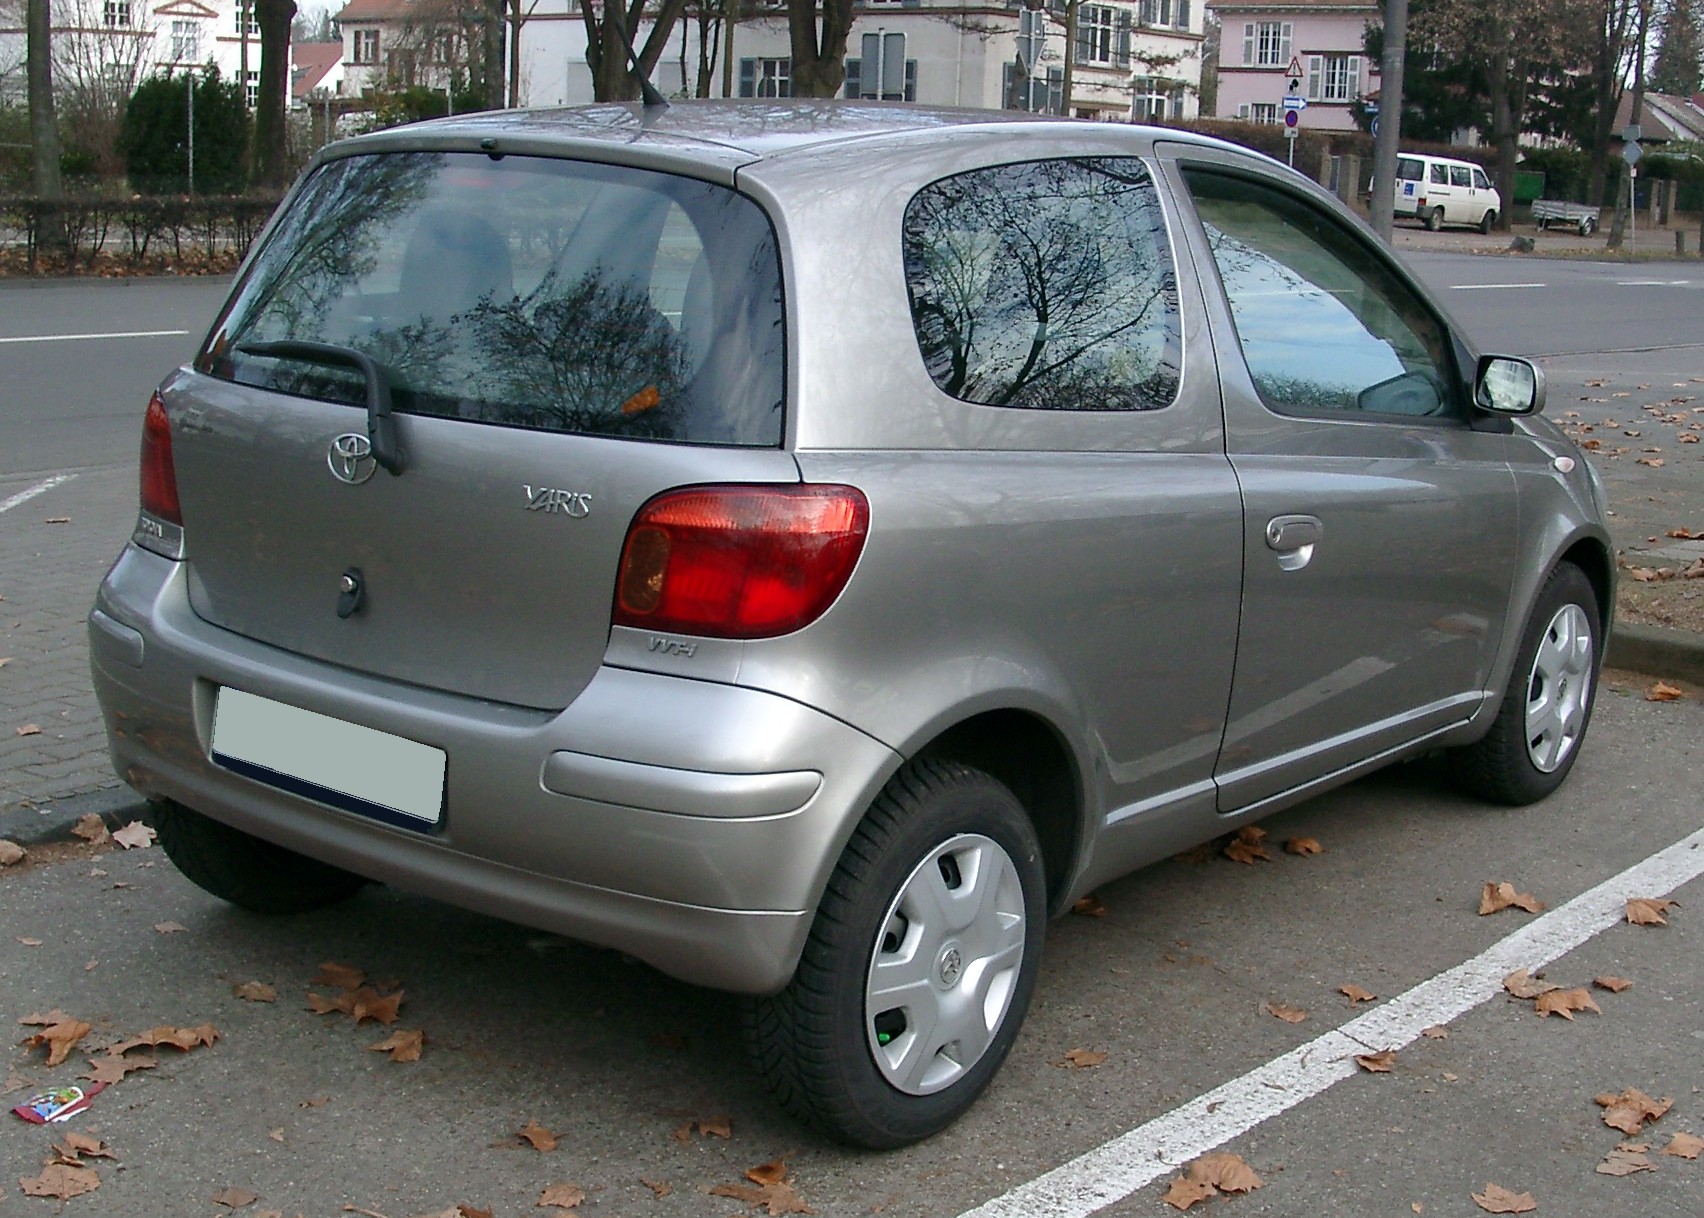 File:Toyota Yaris Hybrid (XP210) IMG 4864.jpg - Wikimedia Commons